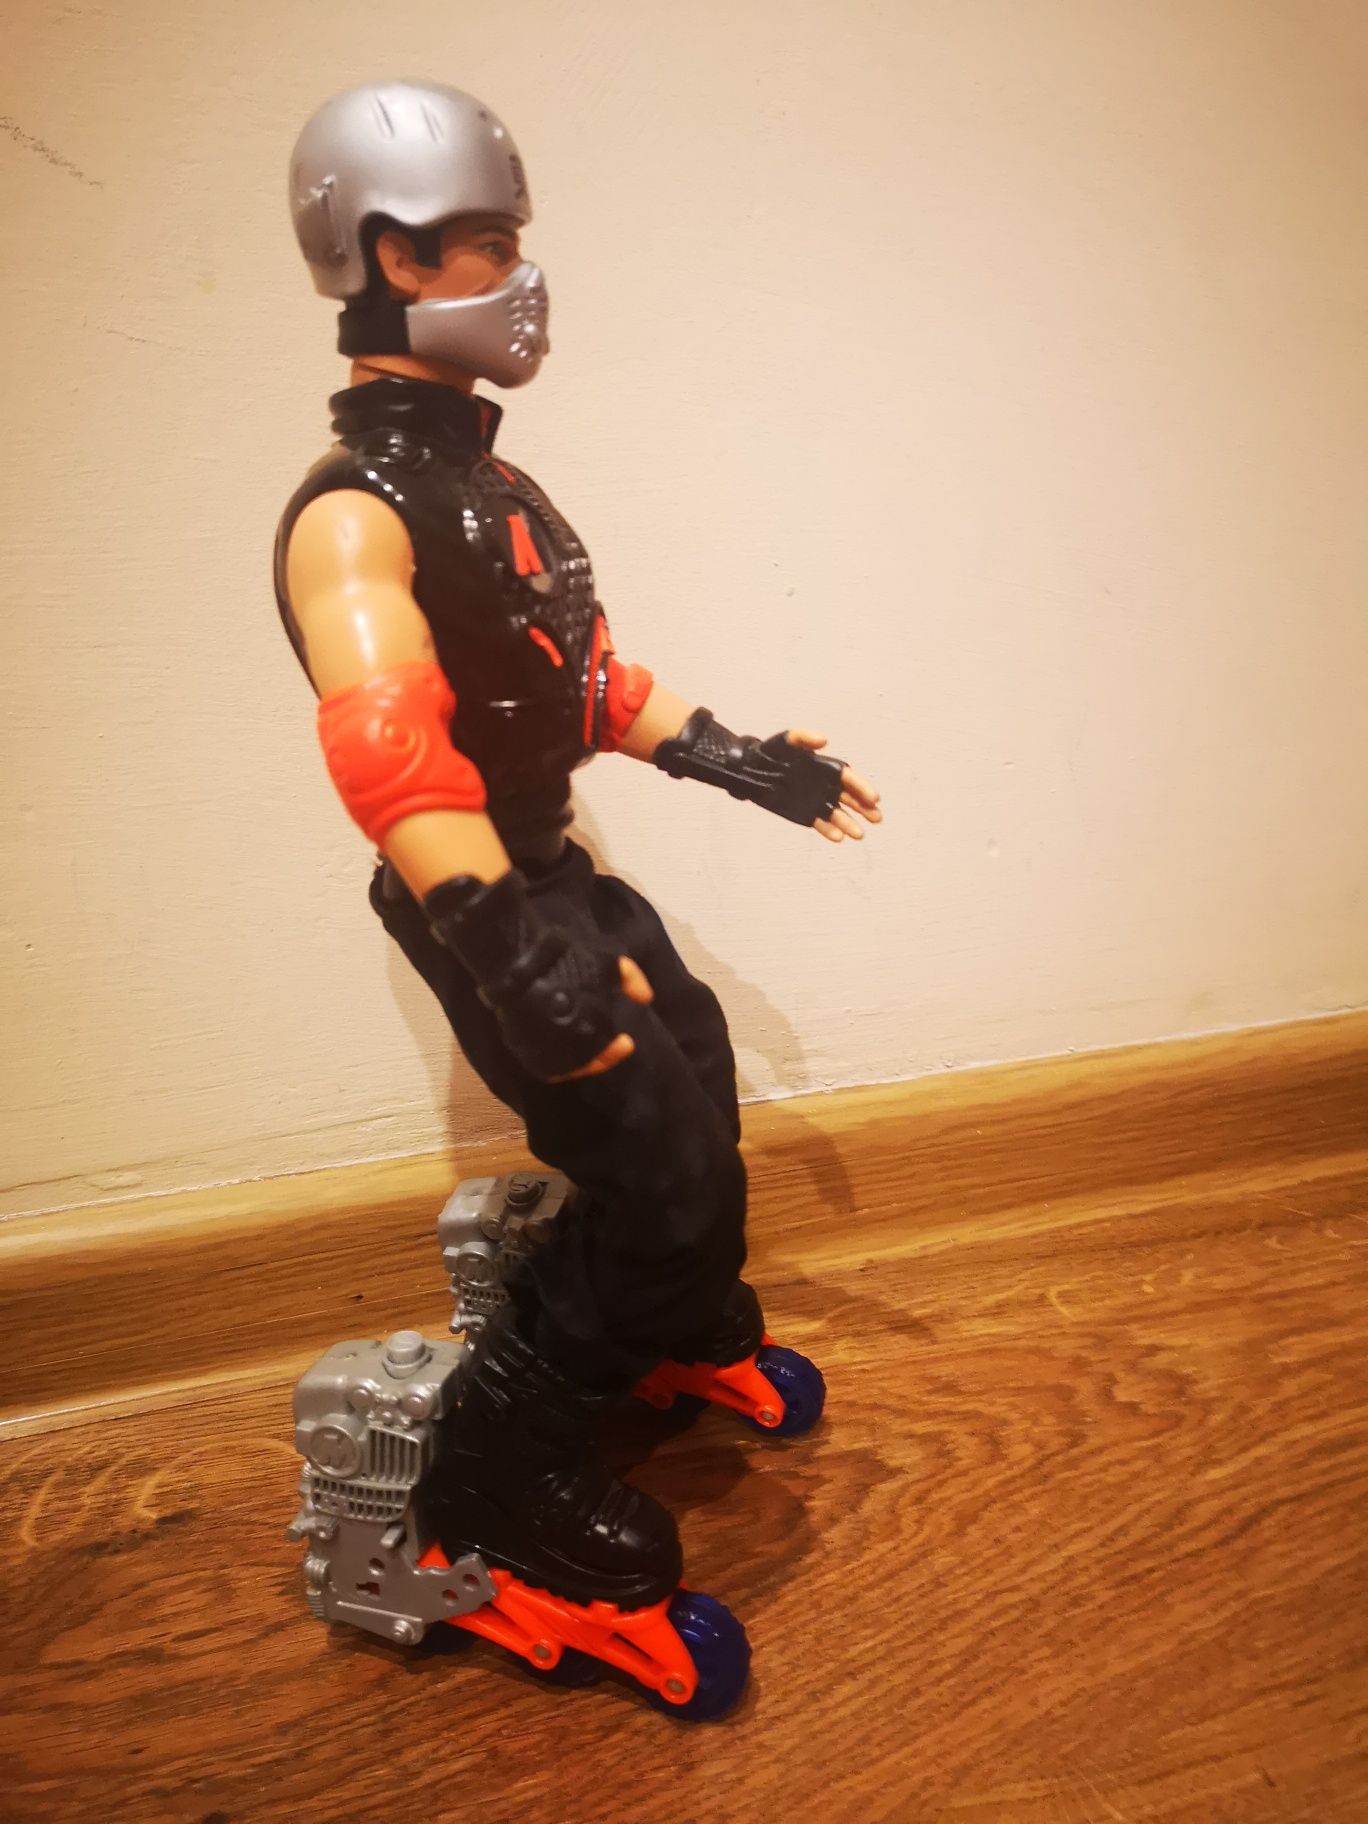 Hasbro Action Man roller skater, lalka figurka na rolkach z Action Man